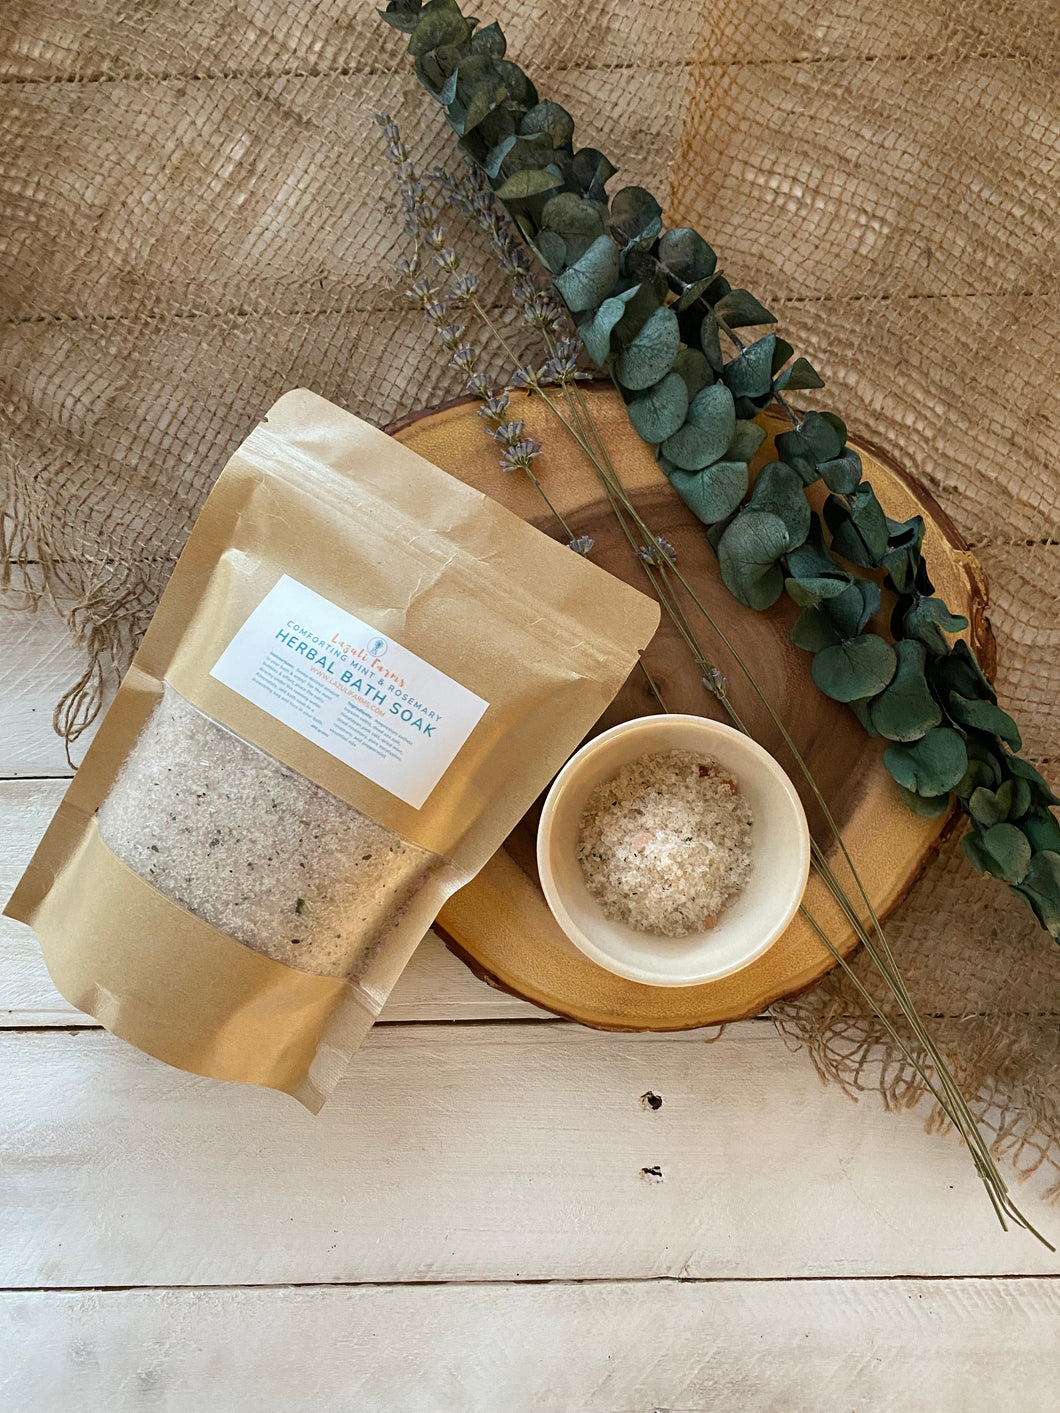 Rosemary + Mint + Eucalyptus | Herbal Bath Soak | All-Natural | Mineral Rich Salt Soak